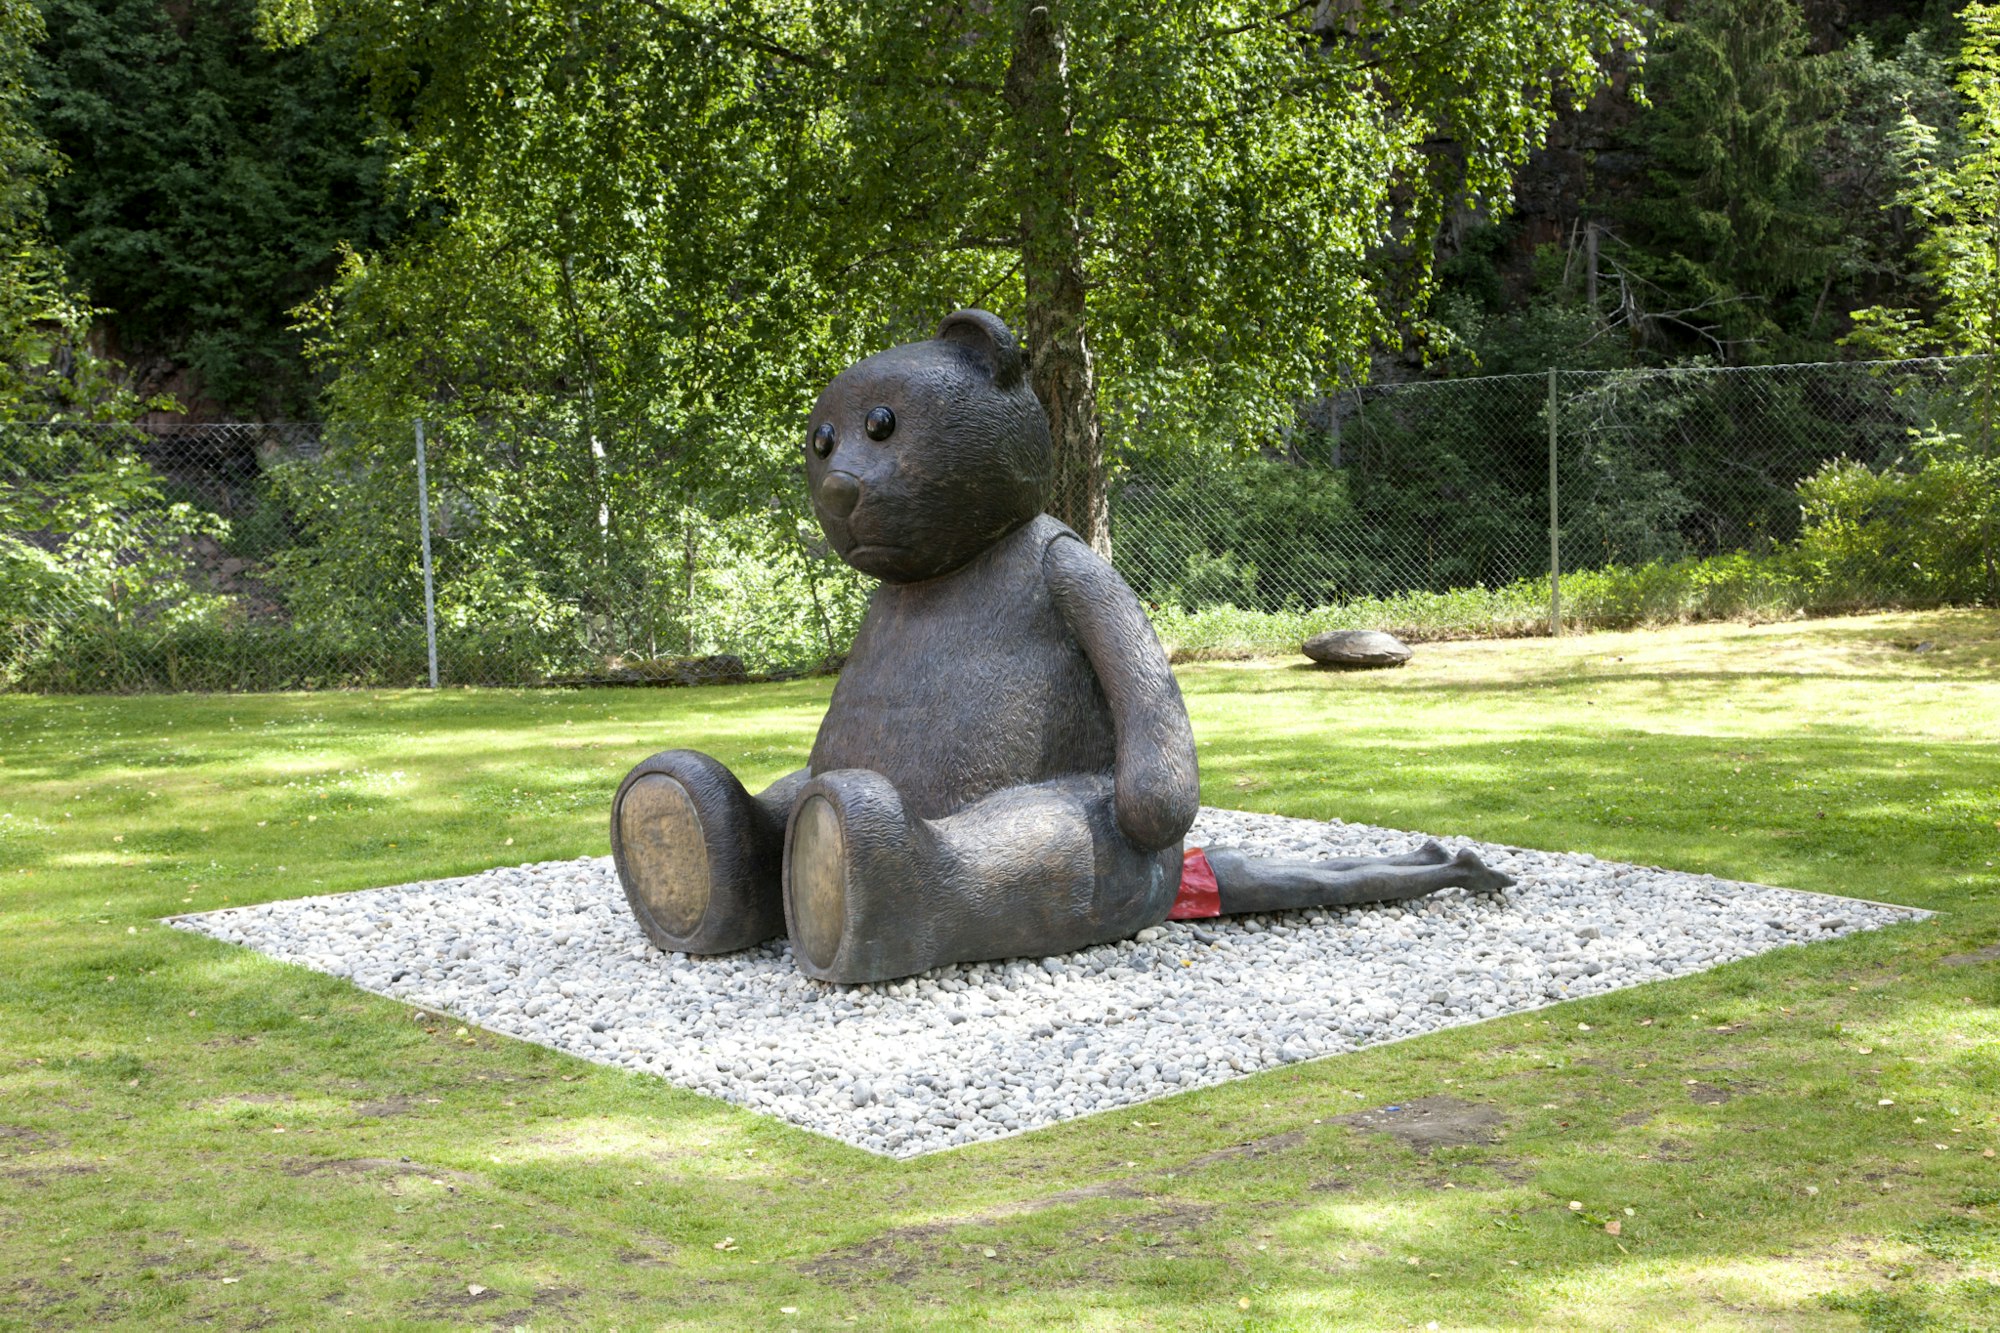 Skulptur, teddybjørn i bronse. Sitter på et menneske.